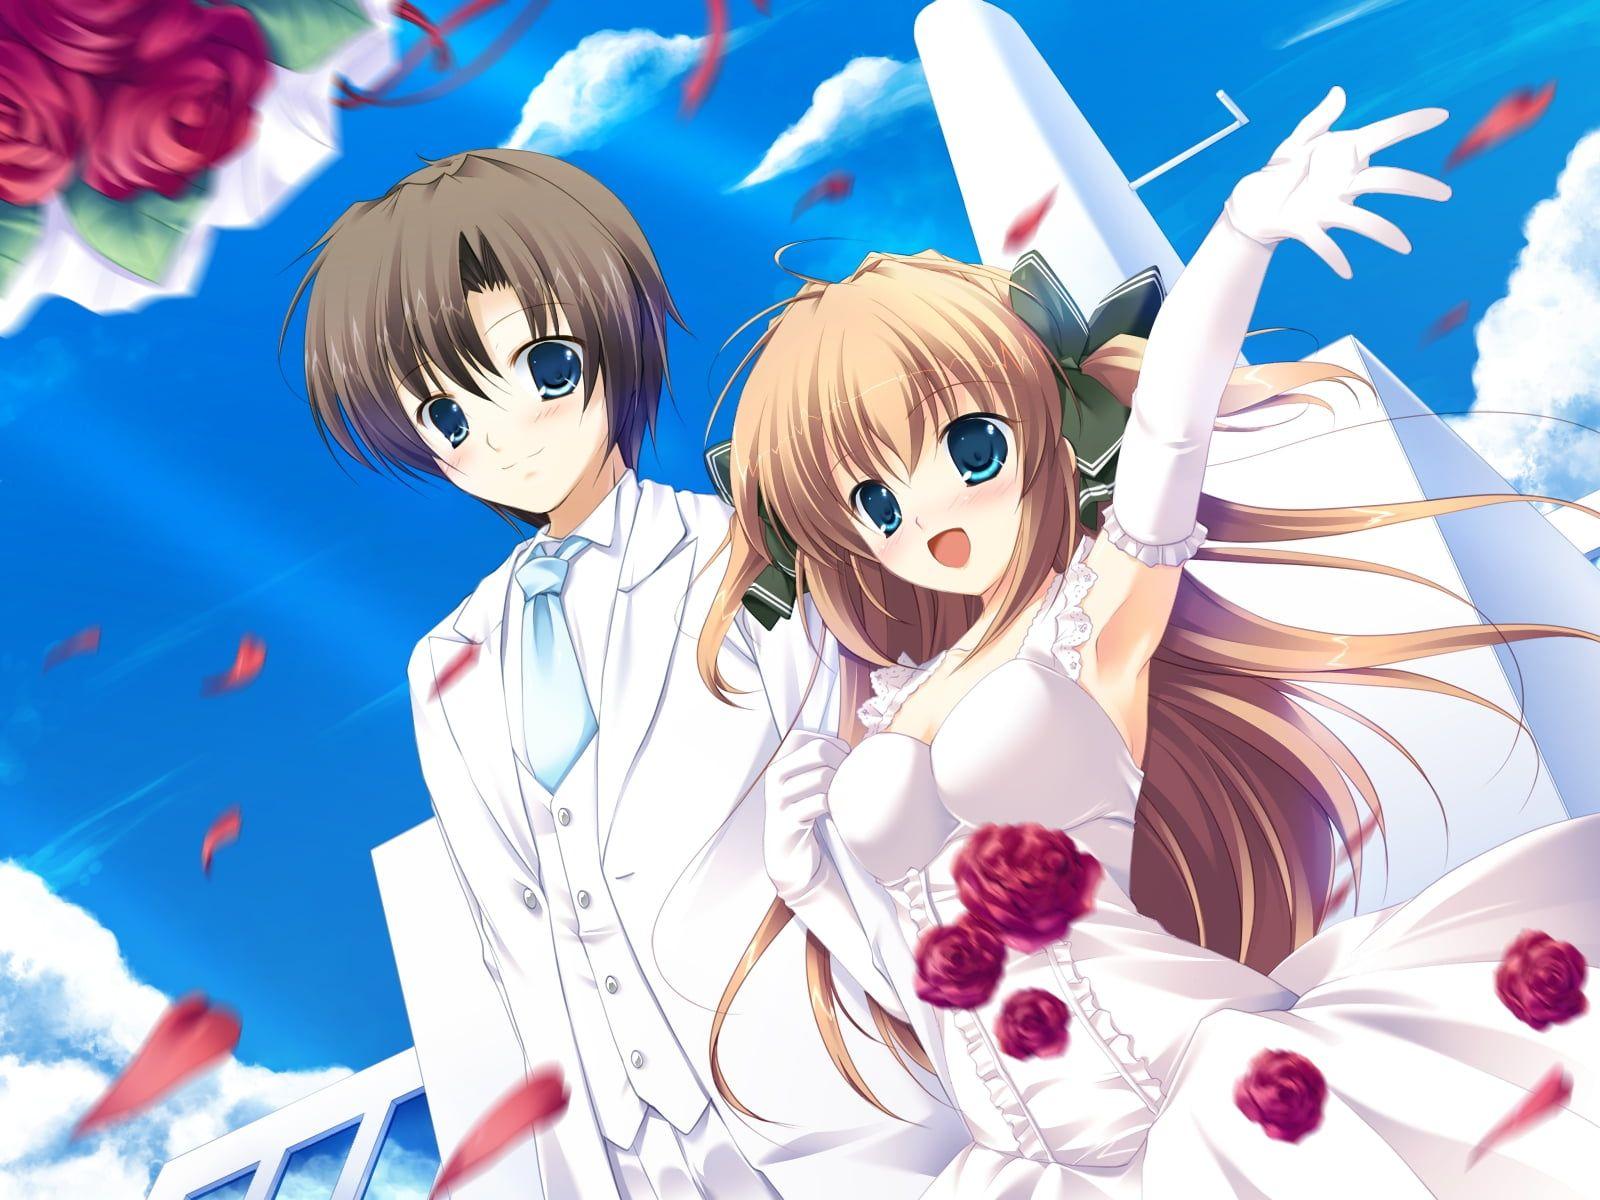 Man and woman wedding anime illustration HD wallpaper. Wallpaper